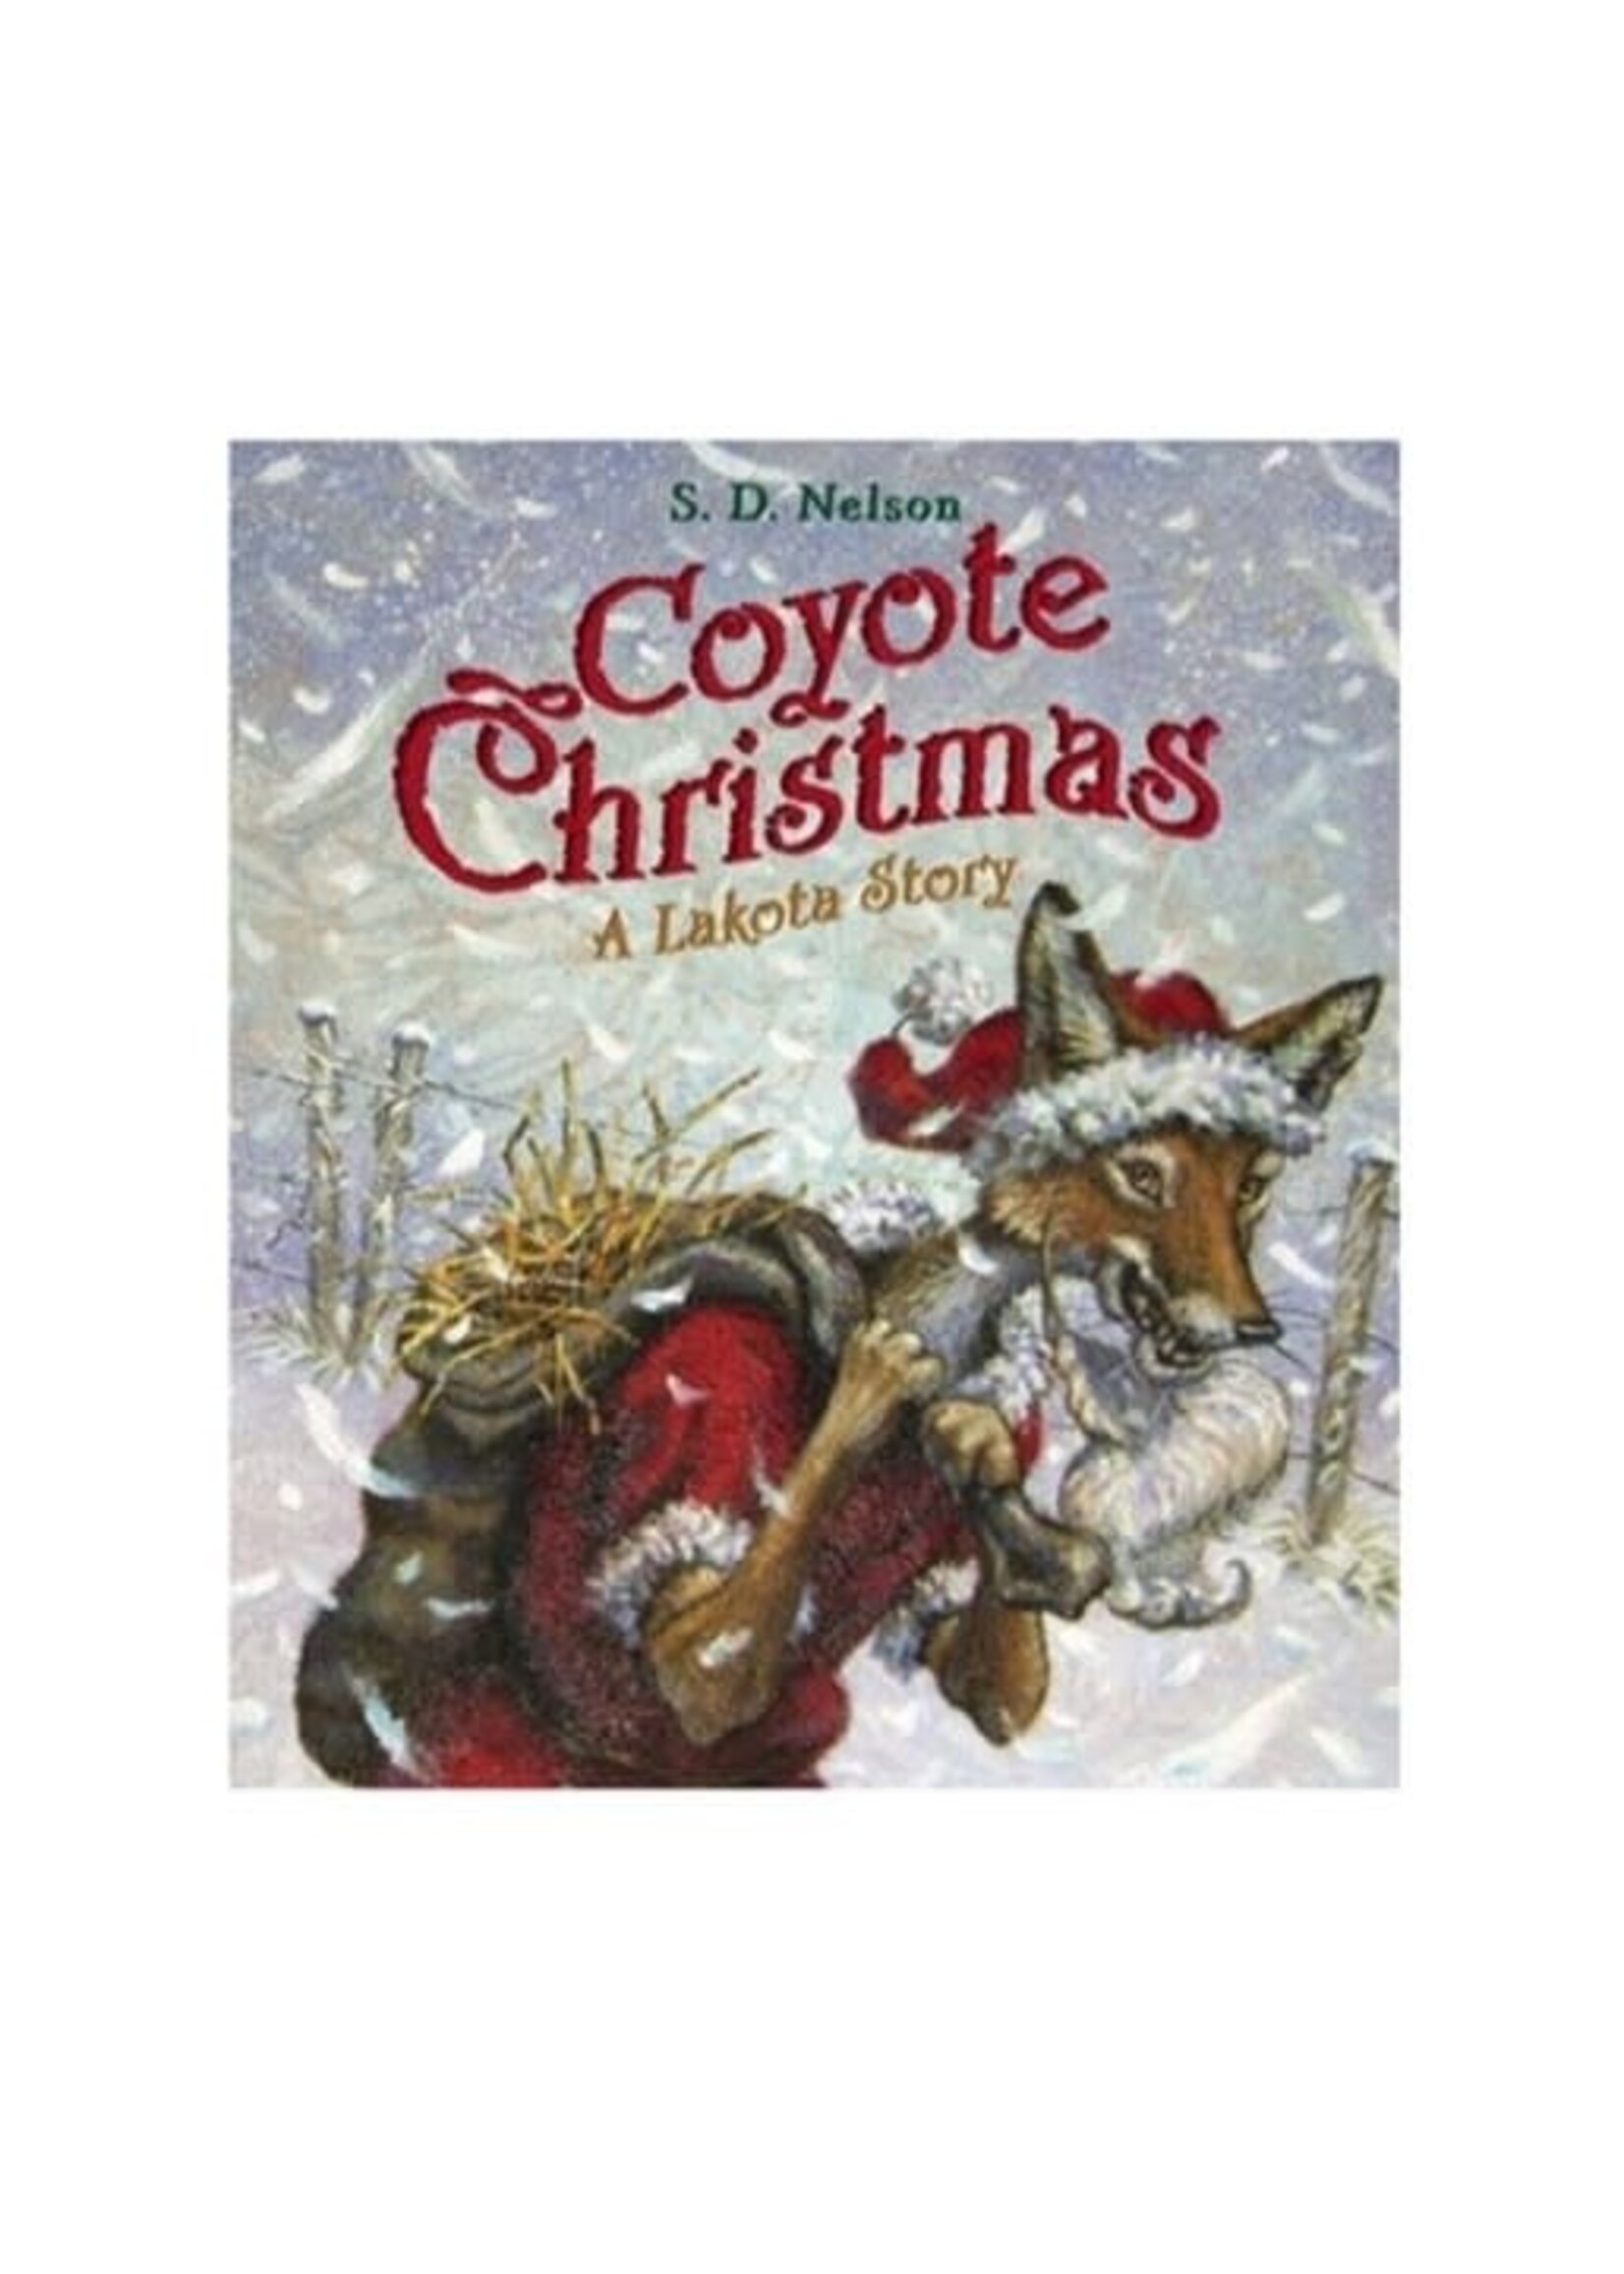 Coyote Christmas A Lakota Story